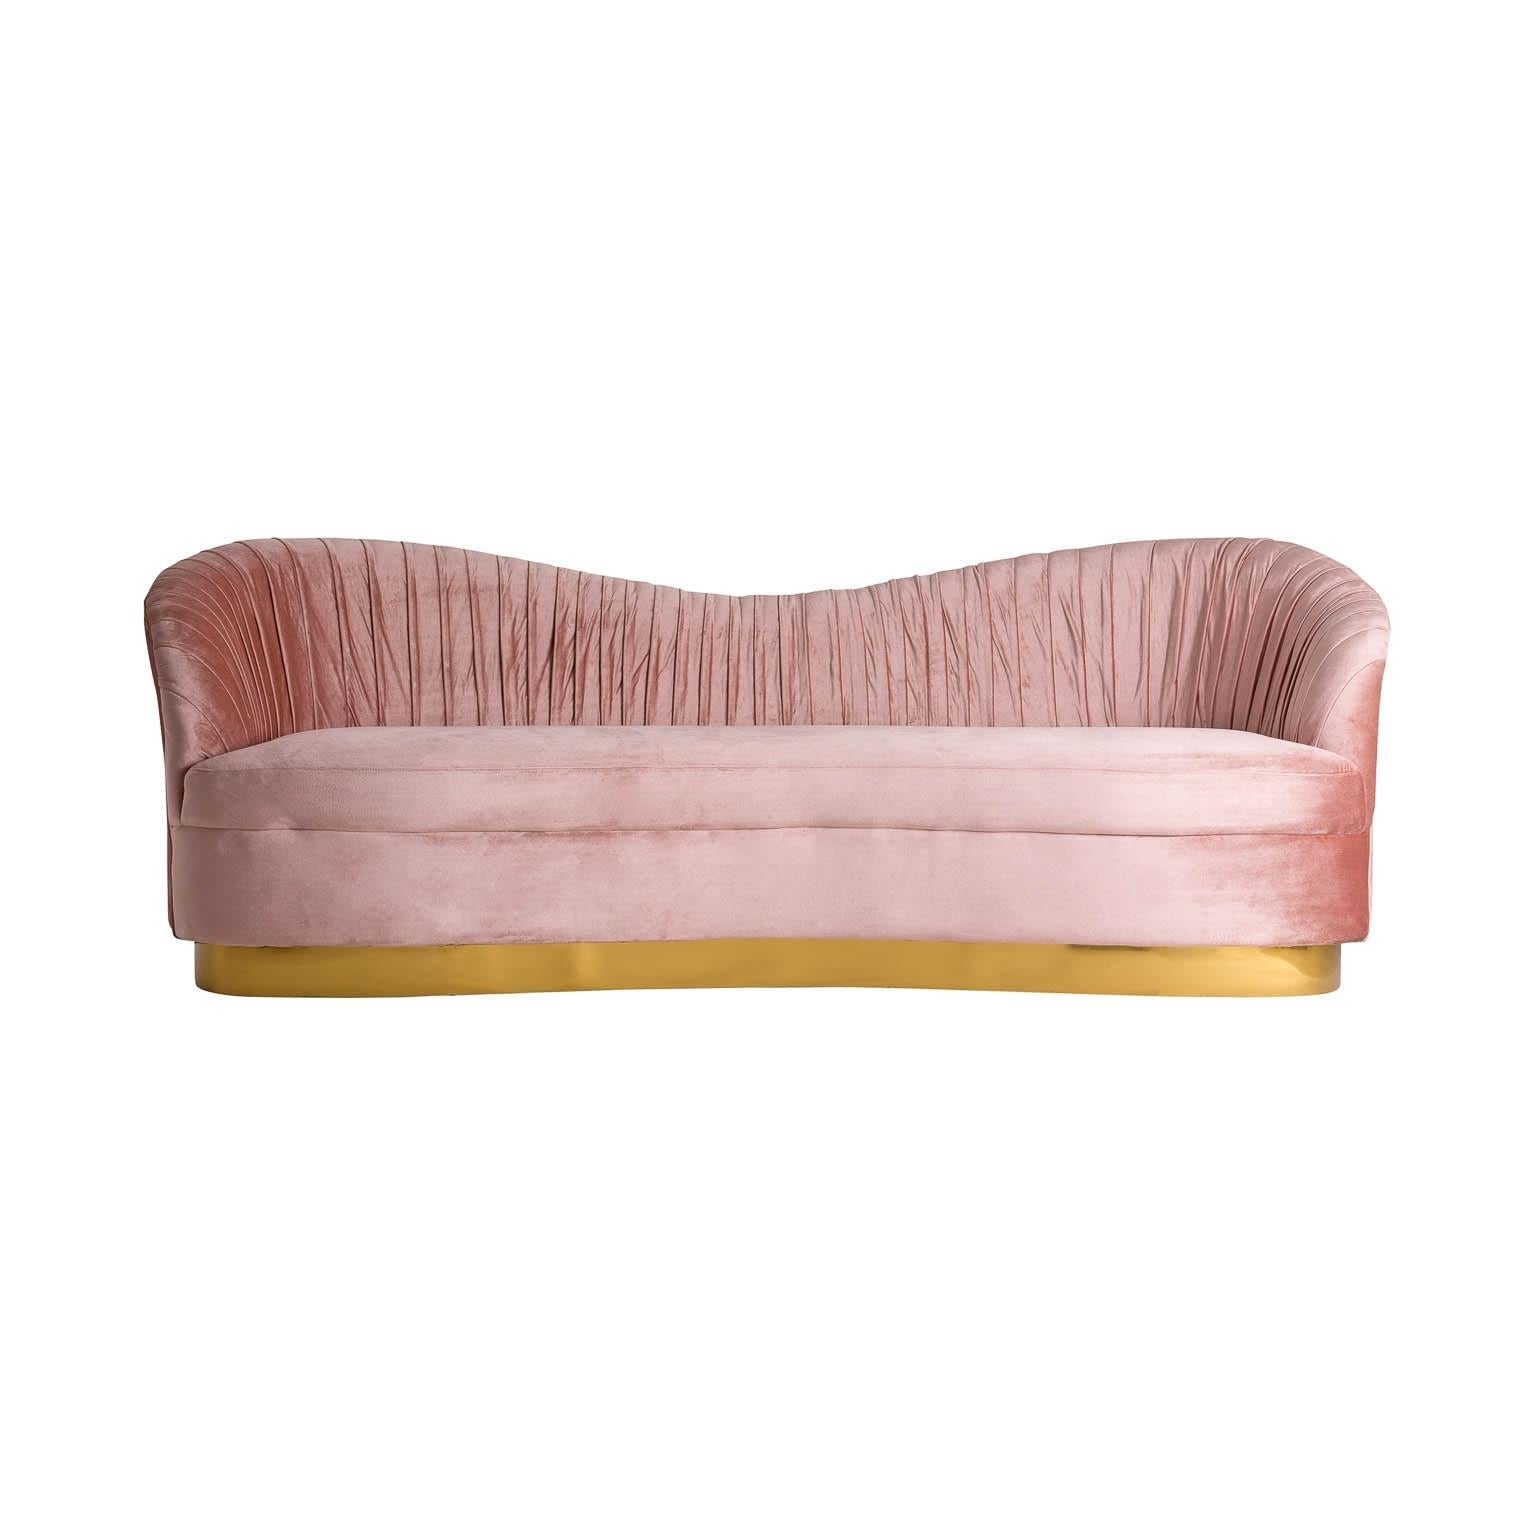 European Powdery Pink Velvet Sofa Art Deco Style